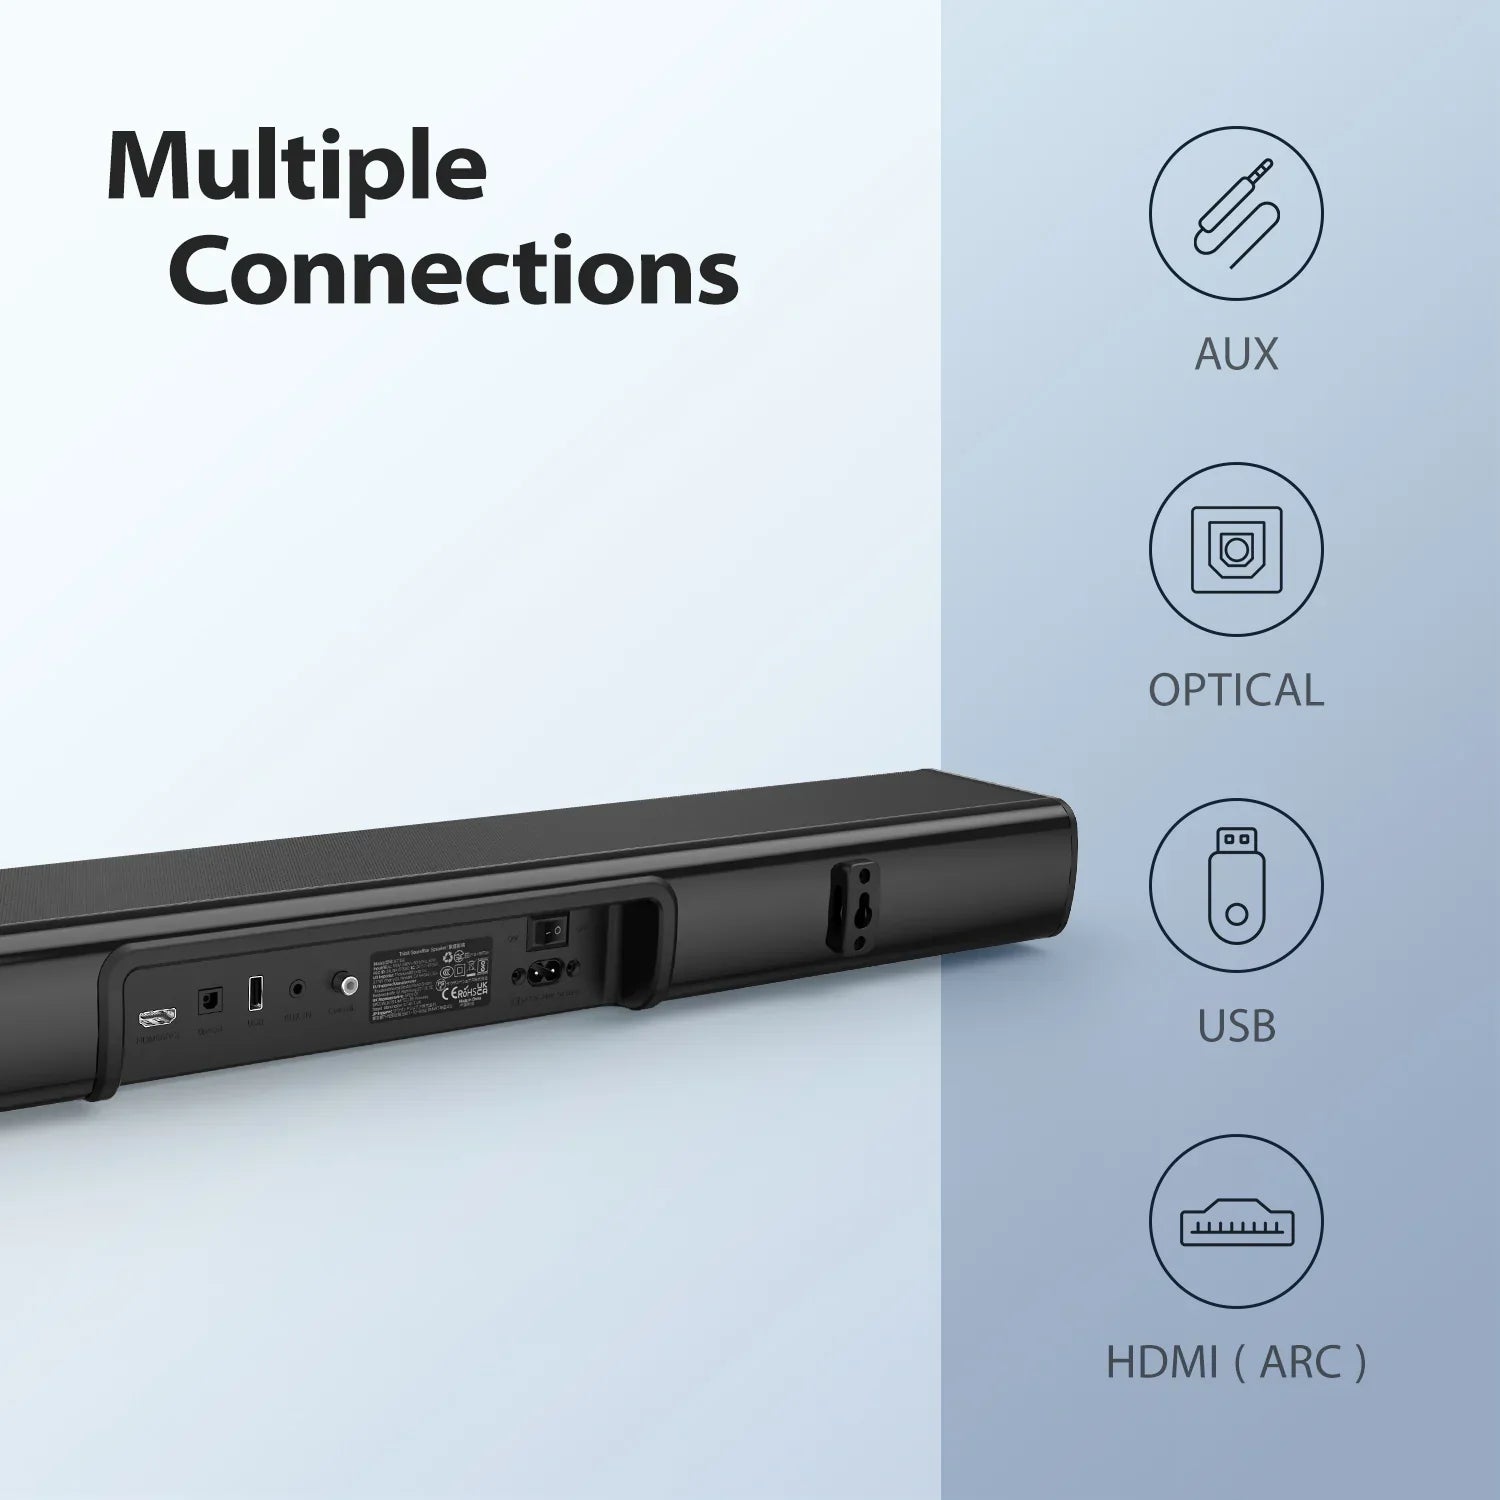 Tribit BTS-60 Soundbar Bluetooth V5.0 100W Home Bluetooth Speaker